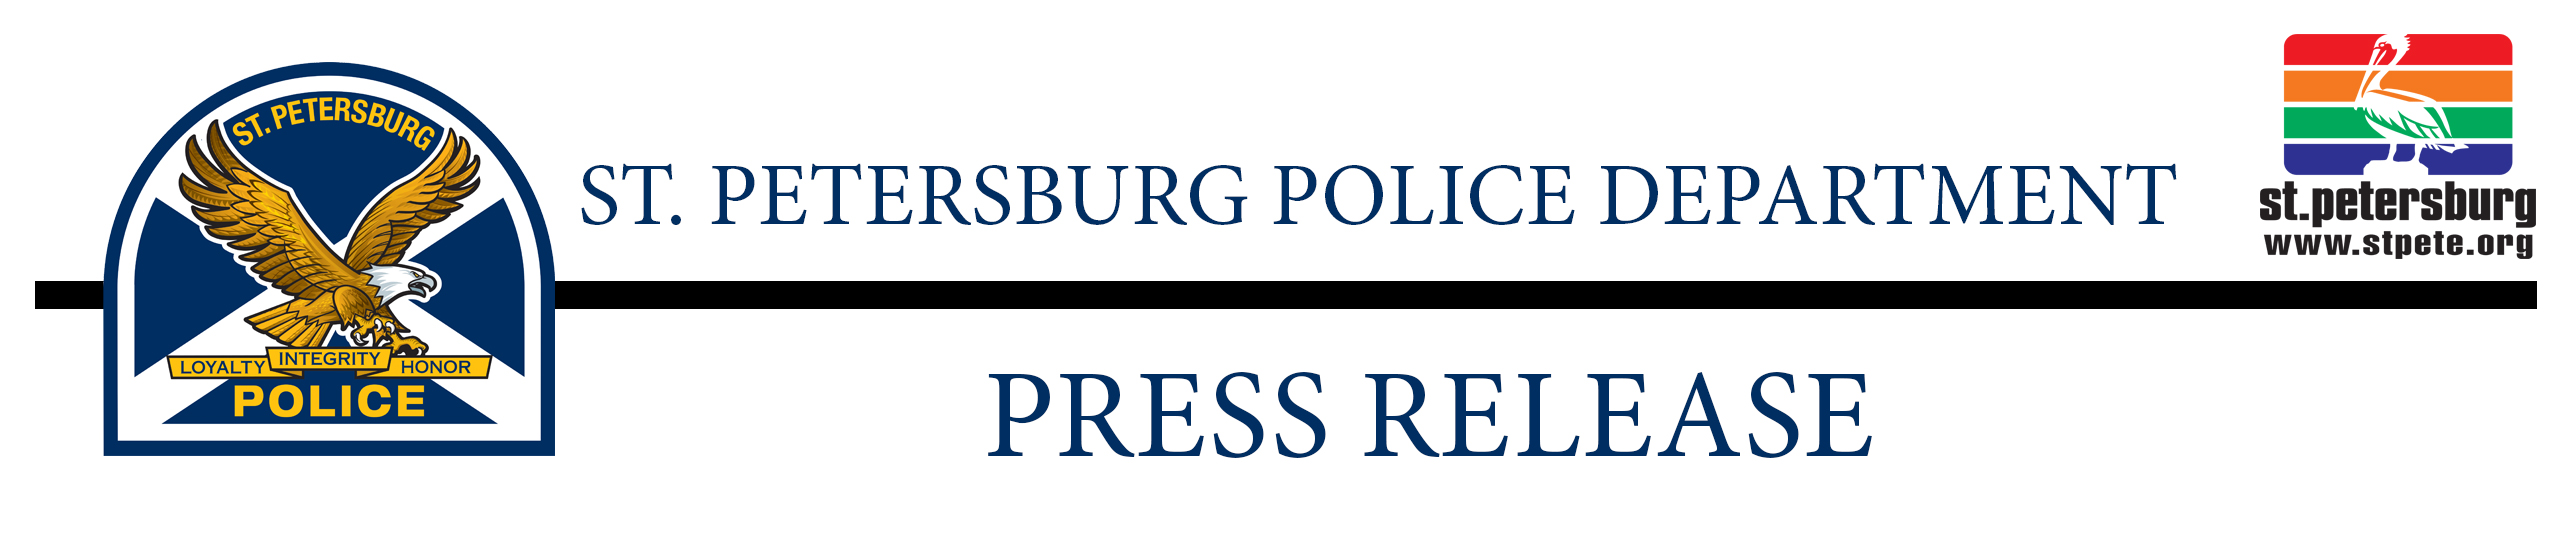 St. Petersburg Police Press Release